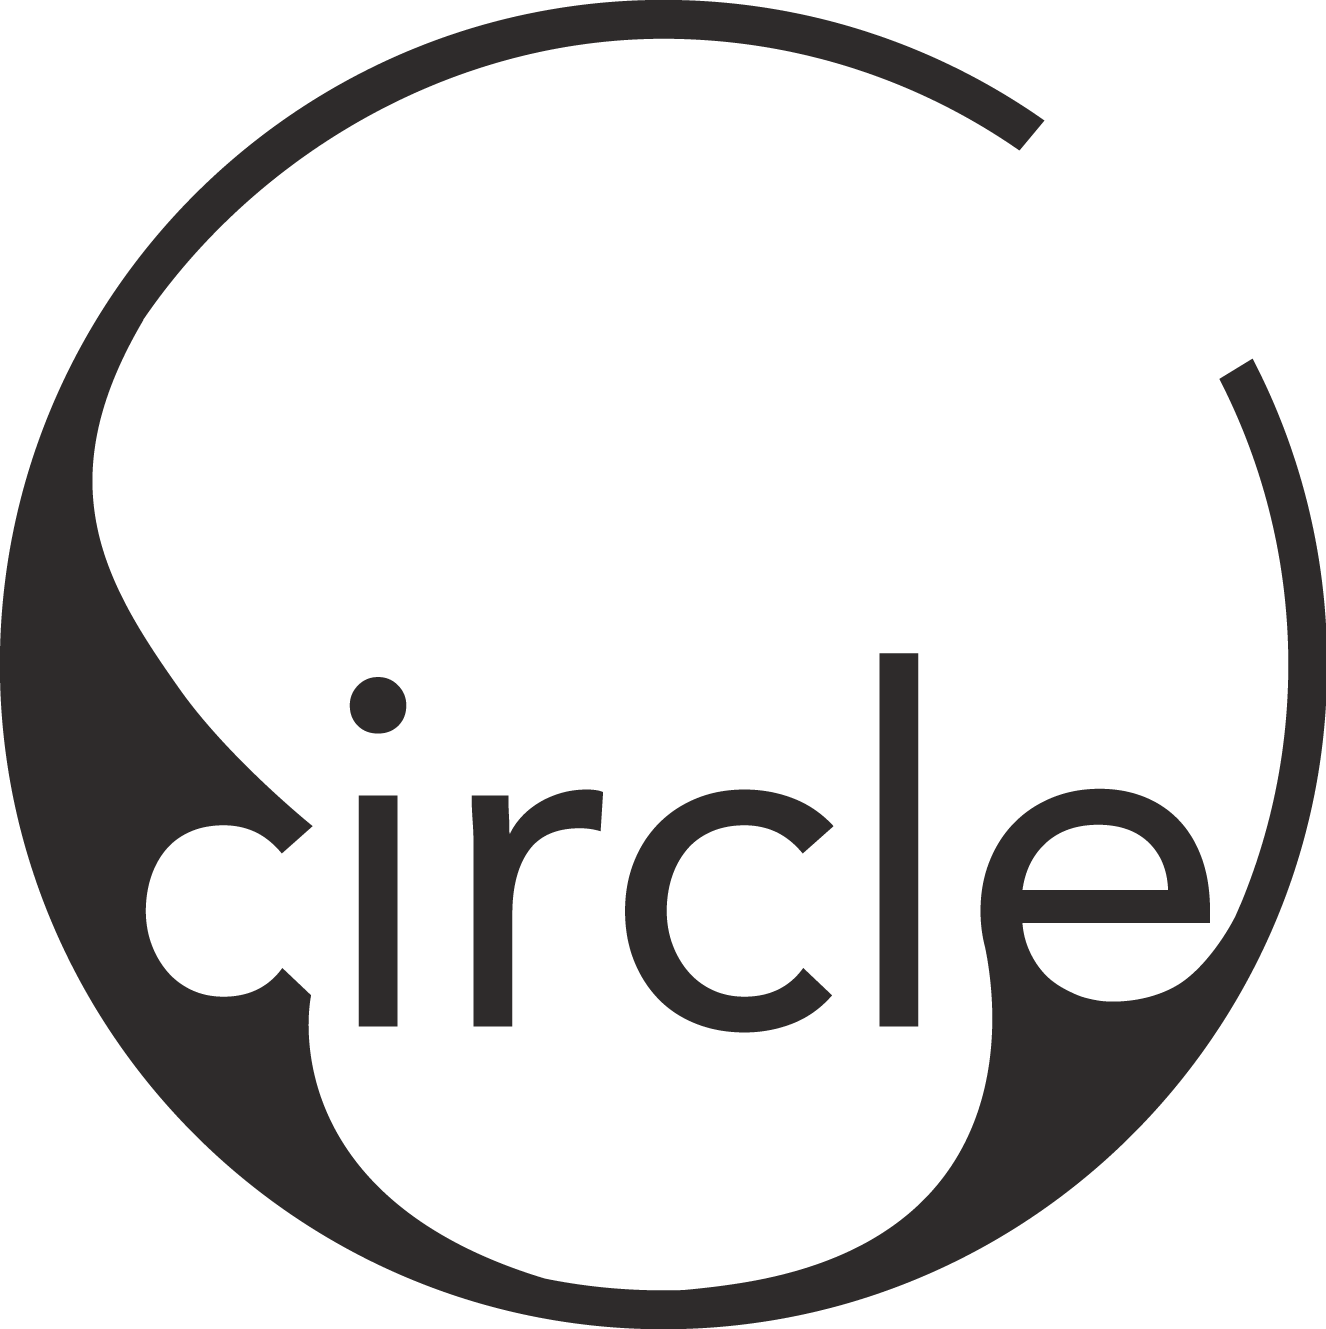 Circle Booking Berlin Based techno agency logo